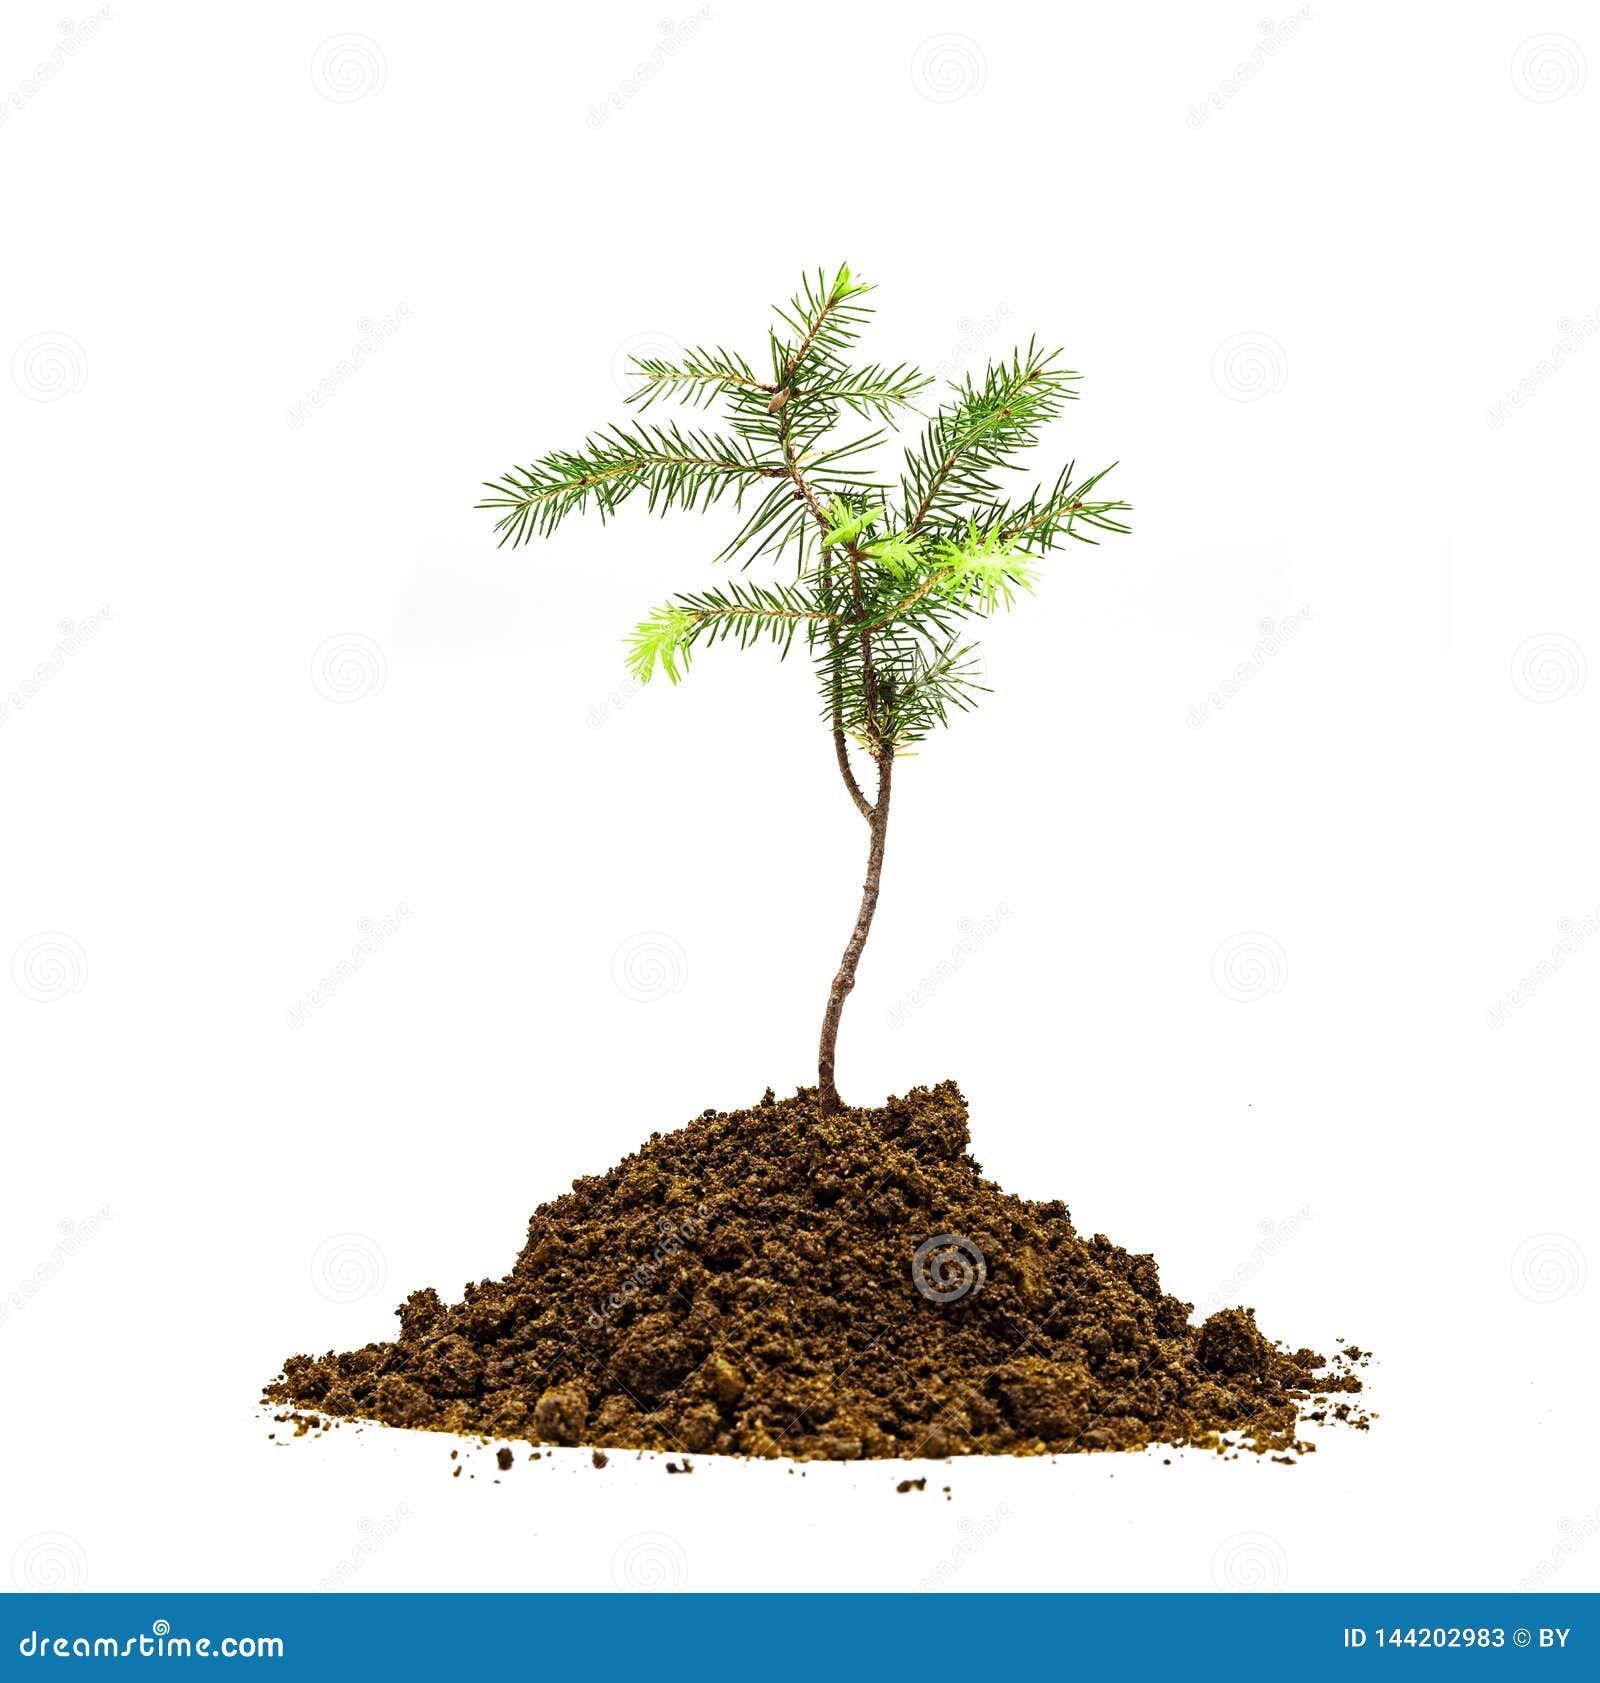 jung tree in soil